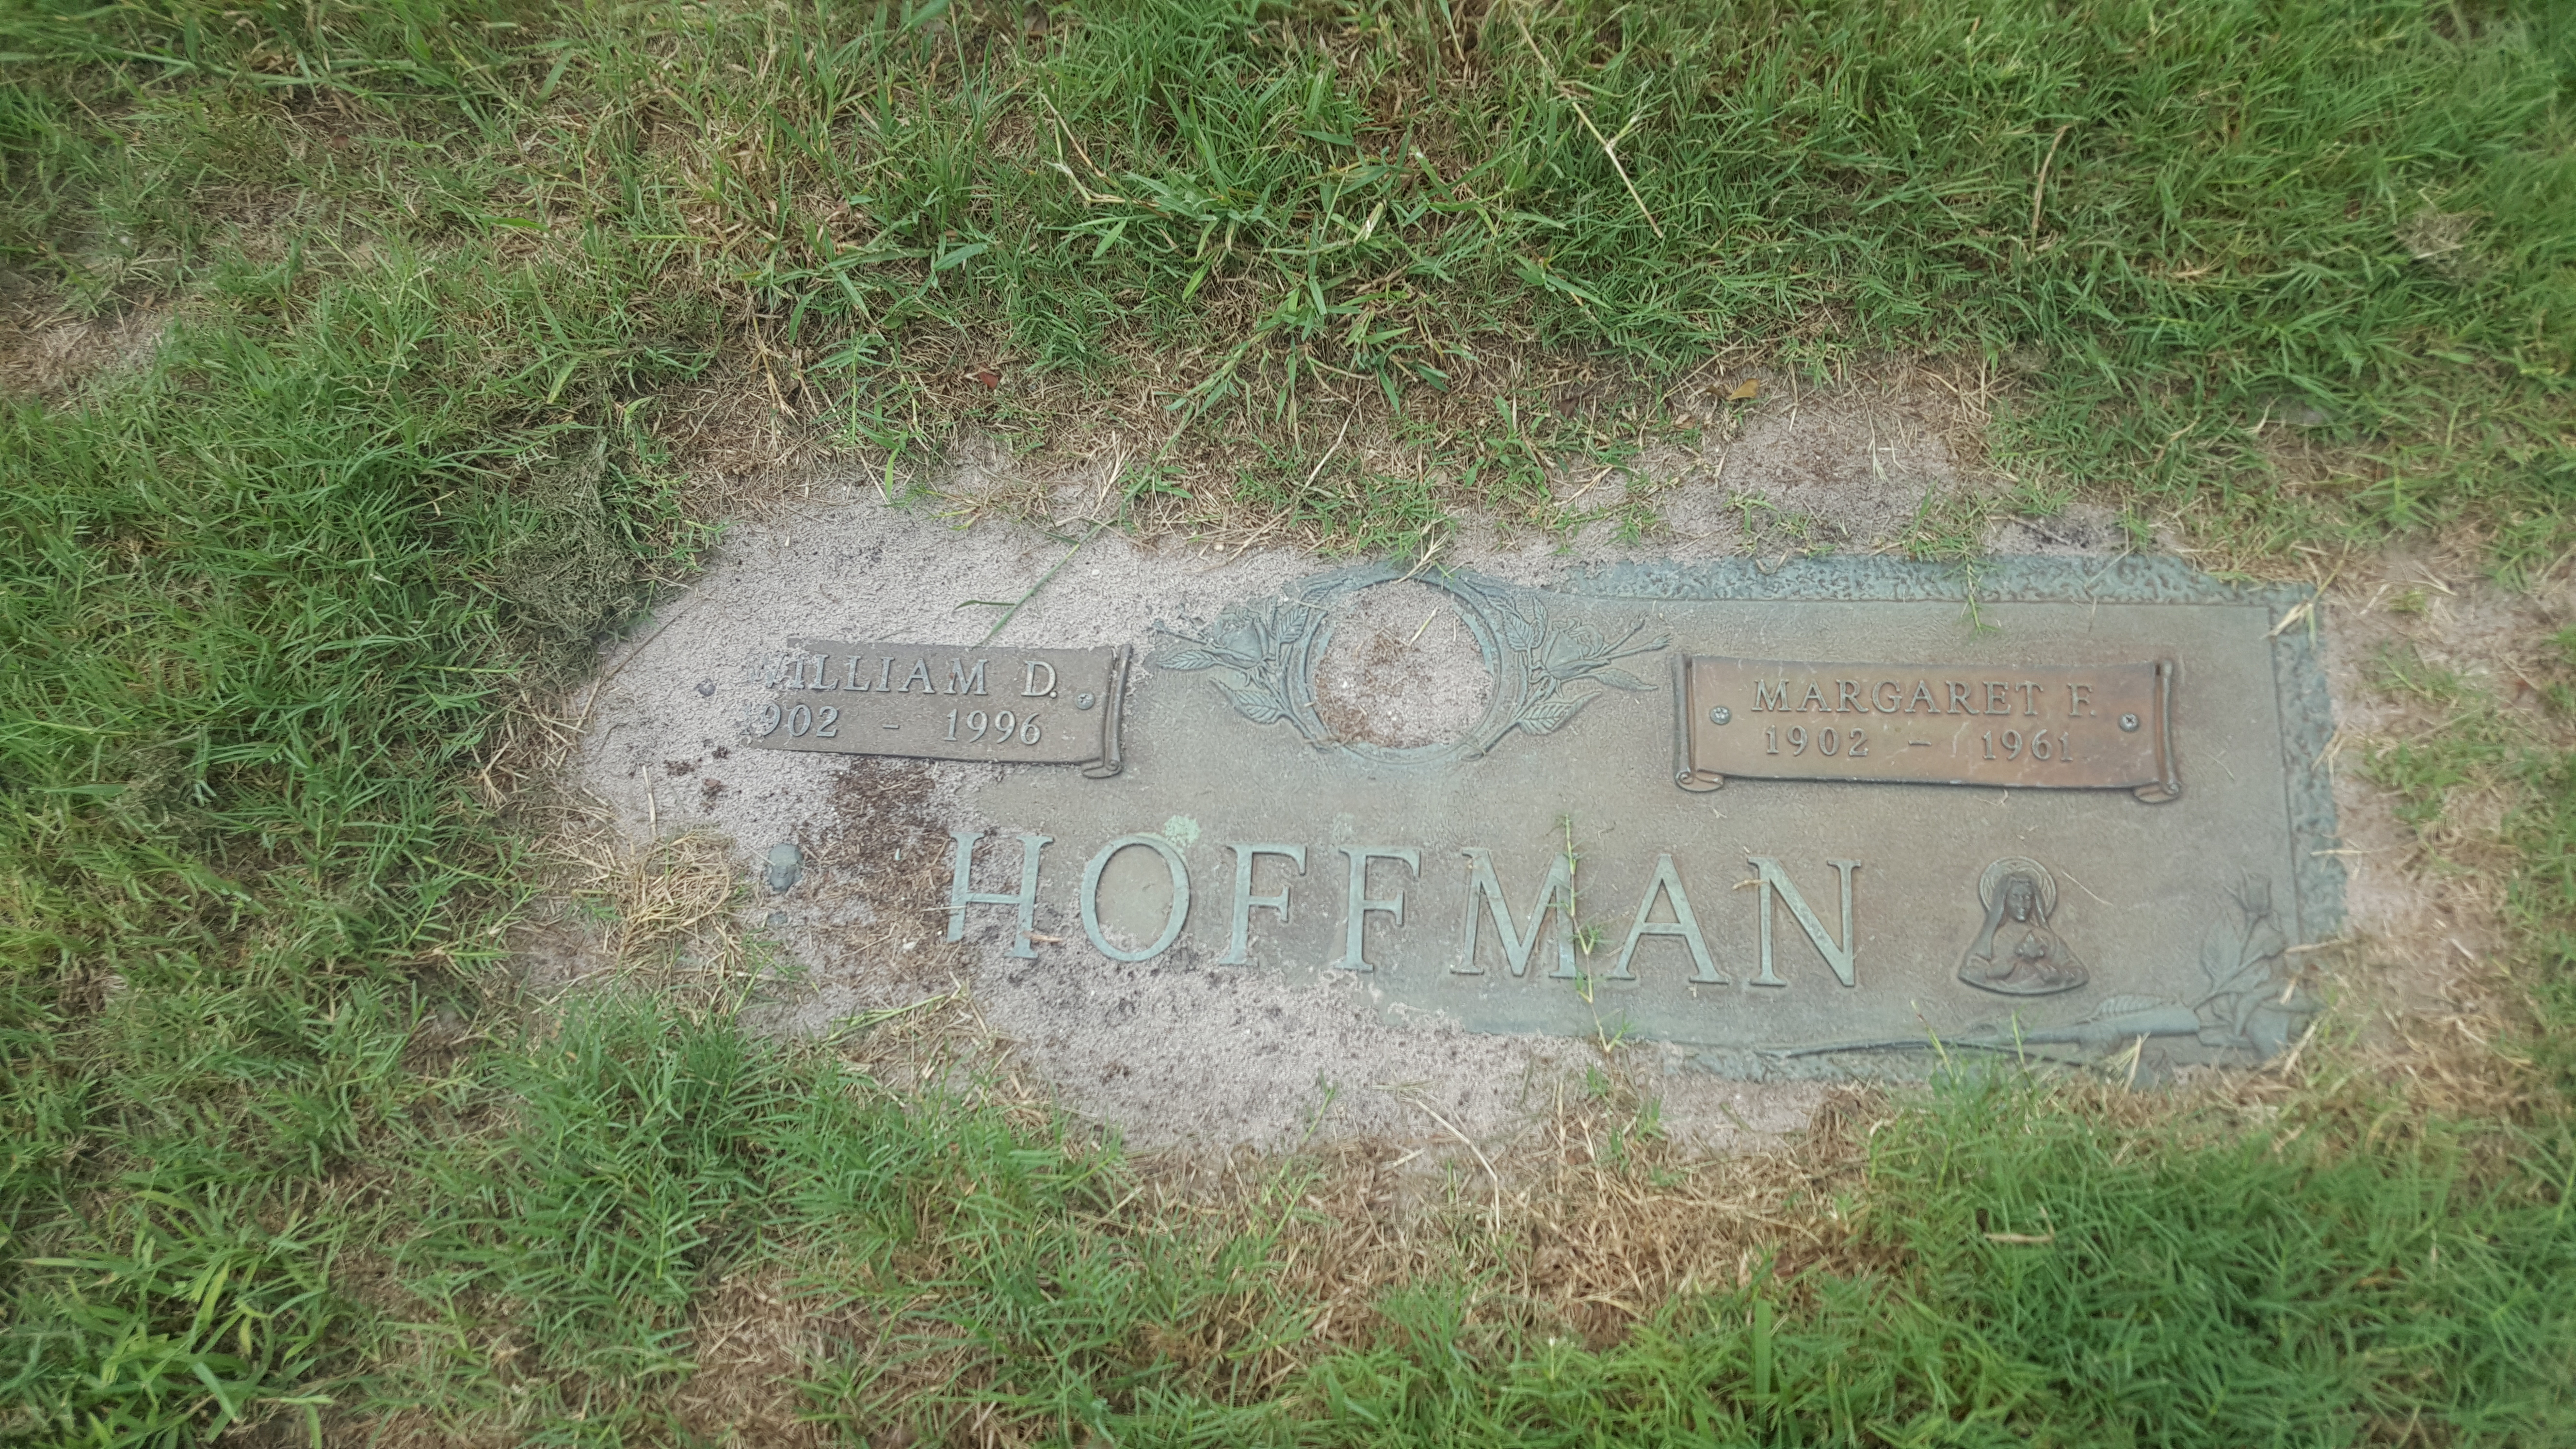 William D Hoffman